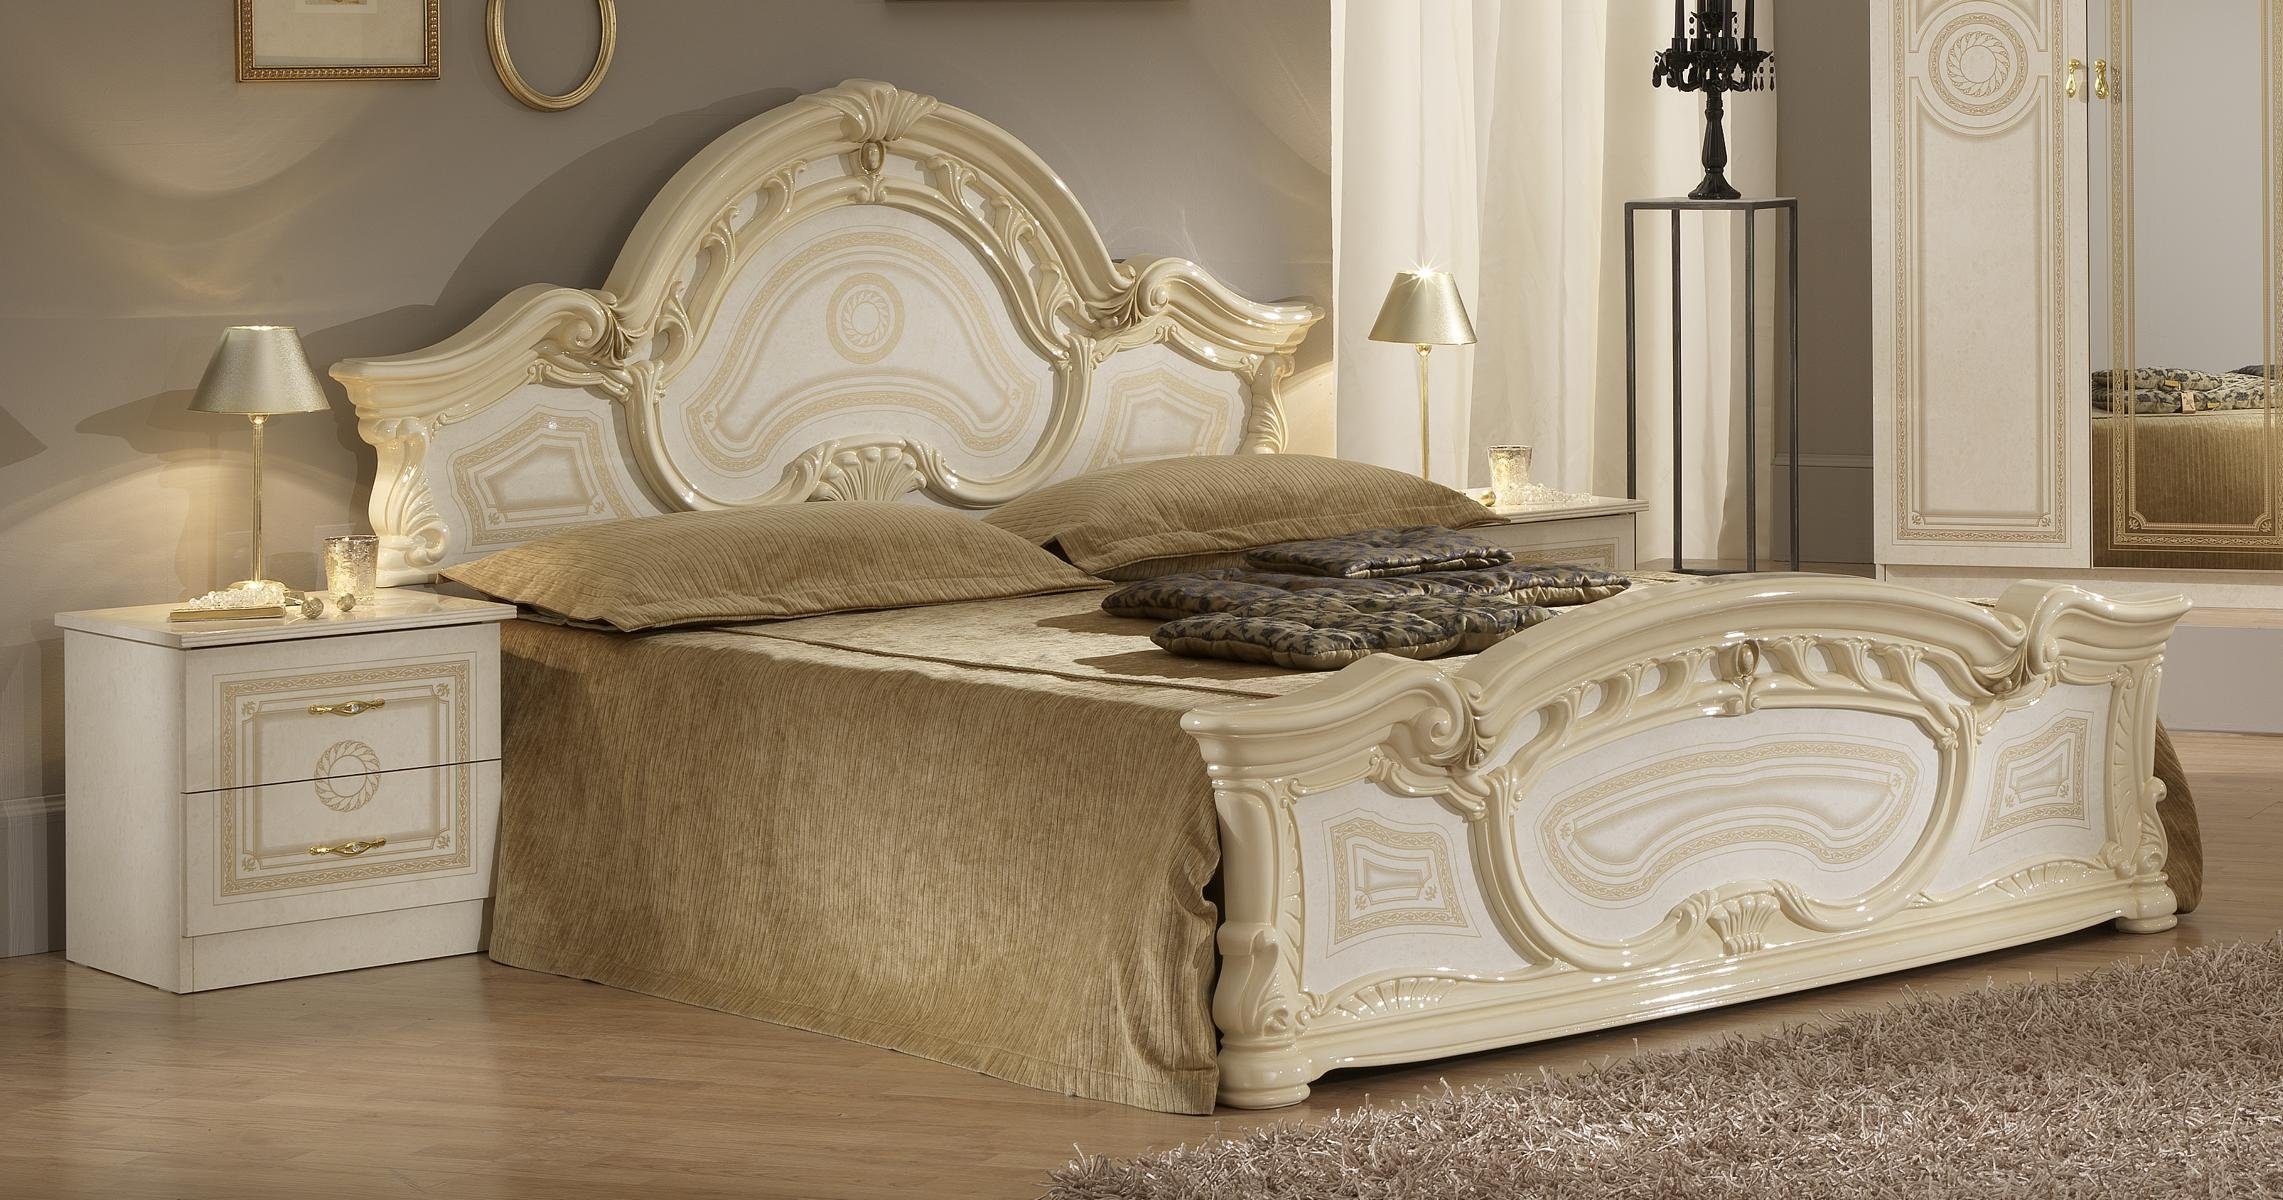 JVmoebel Bett, Hochwertiges Luxus Bett Polster Betten Design Doppel Holz  Ehe 180x200cm Neu online kaufen | OTTO